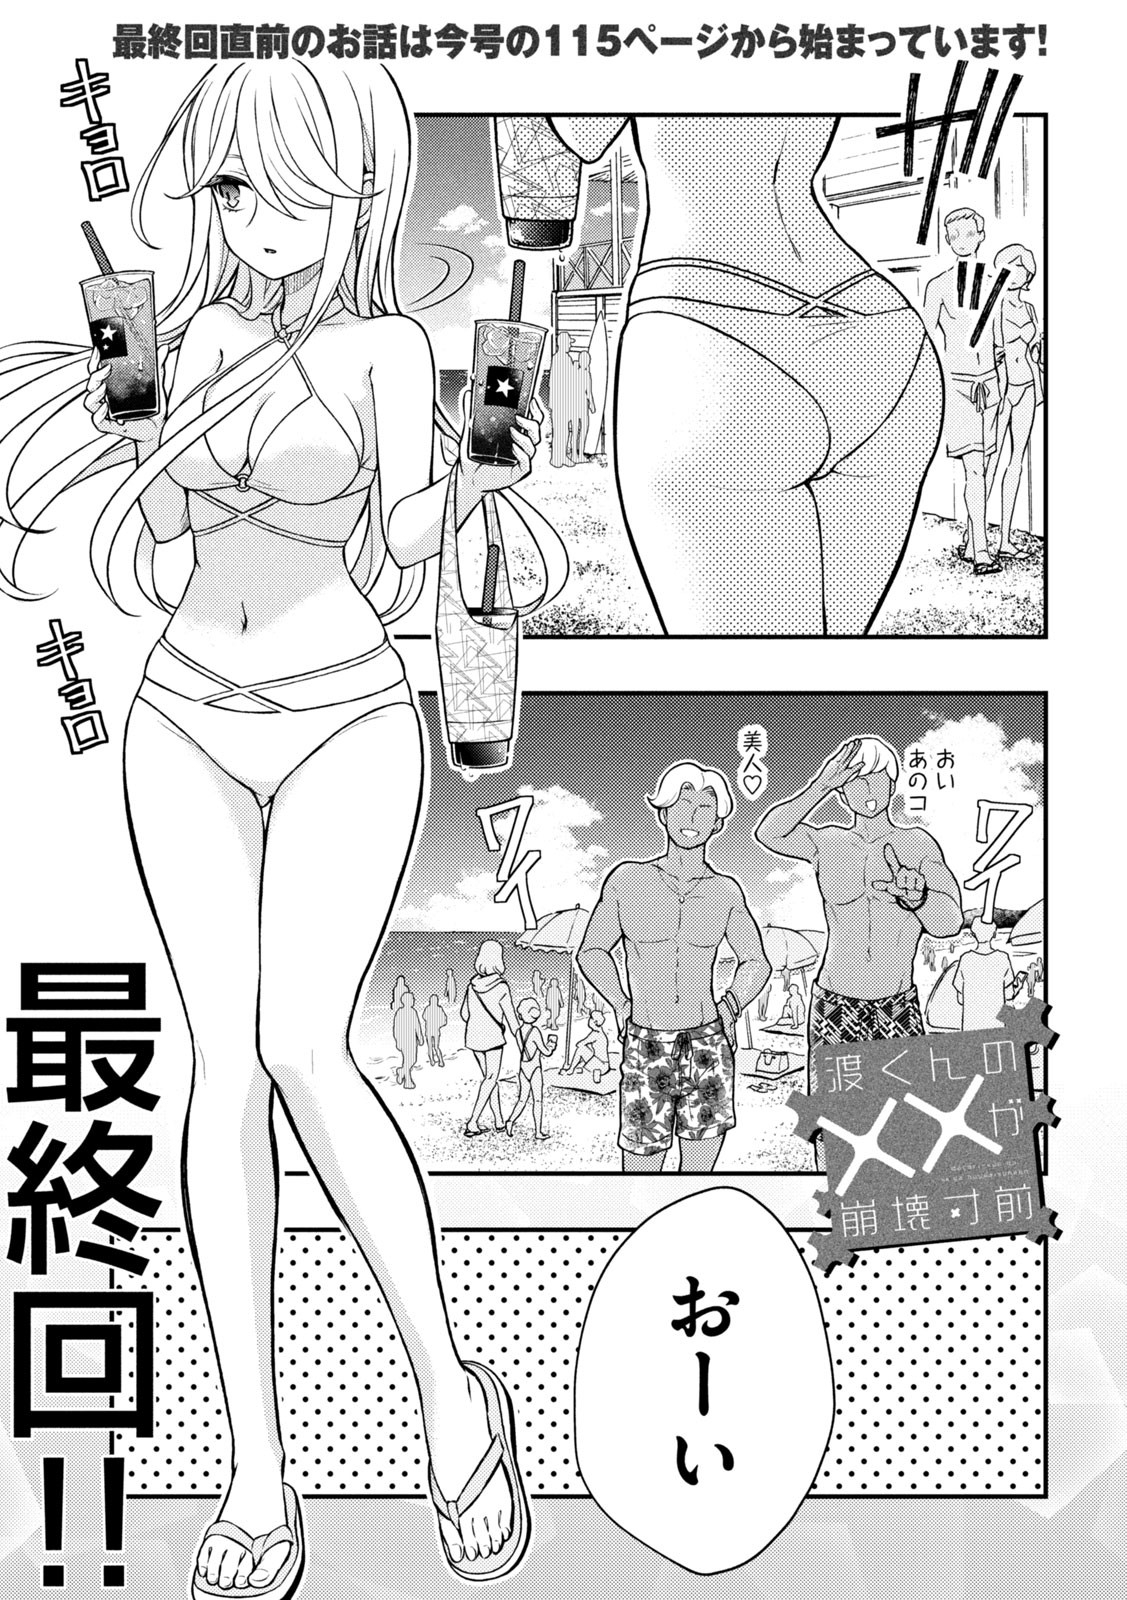 Watari-kun no xx ga Houkai Sunzen - Chapter 92 - Page 1